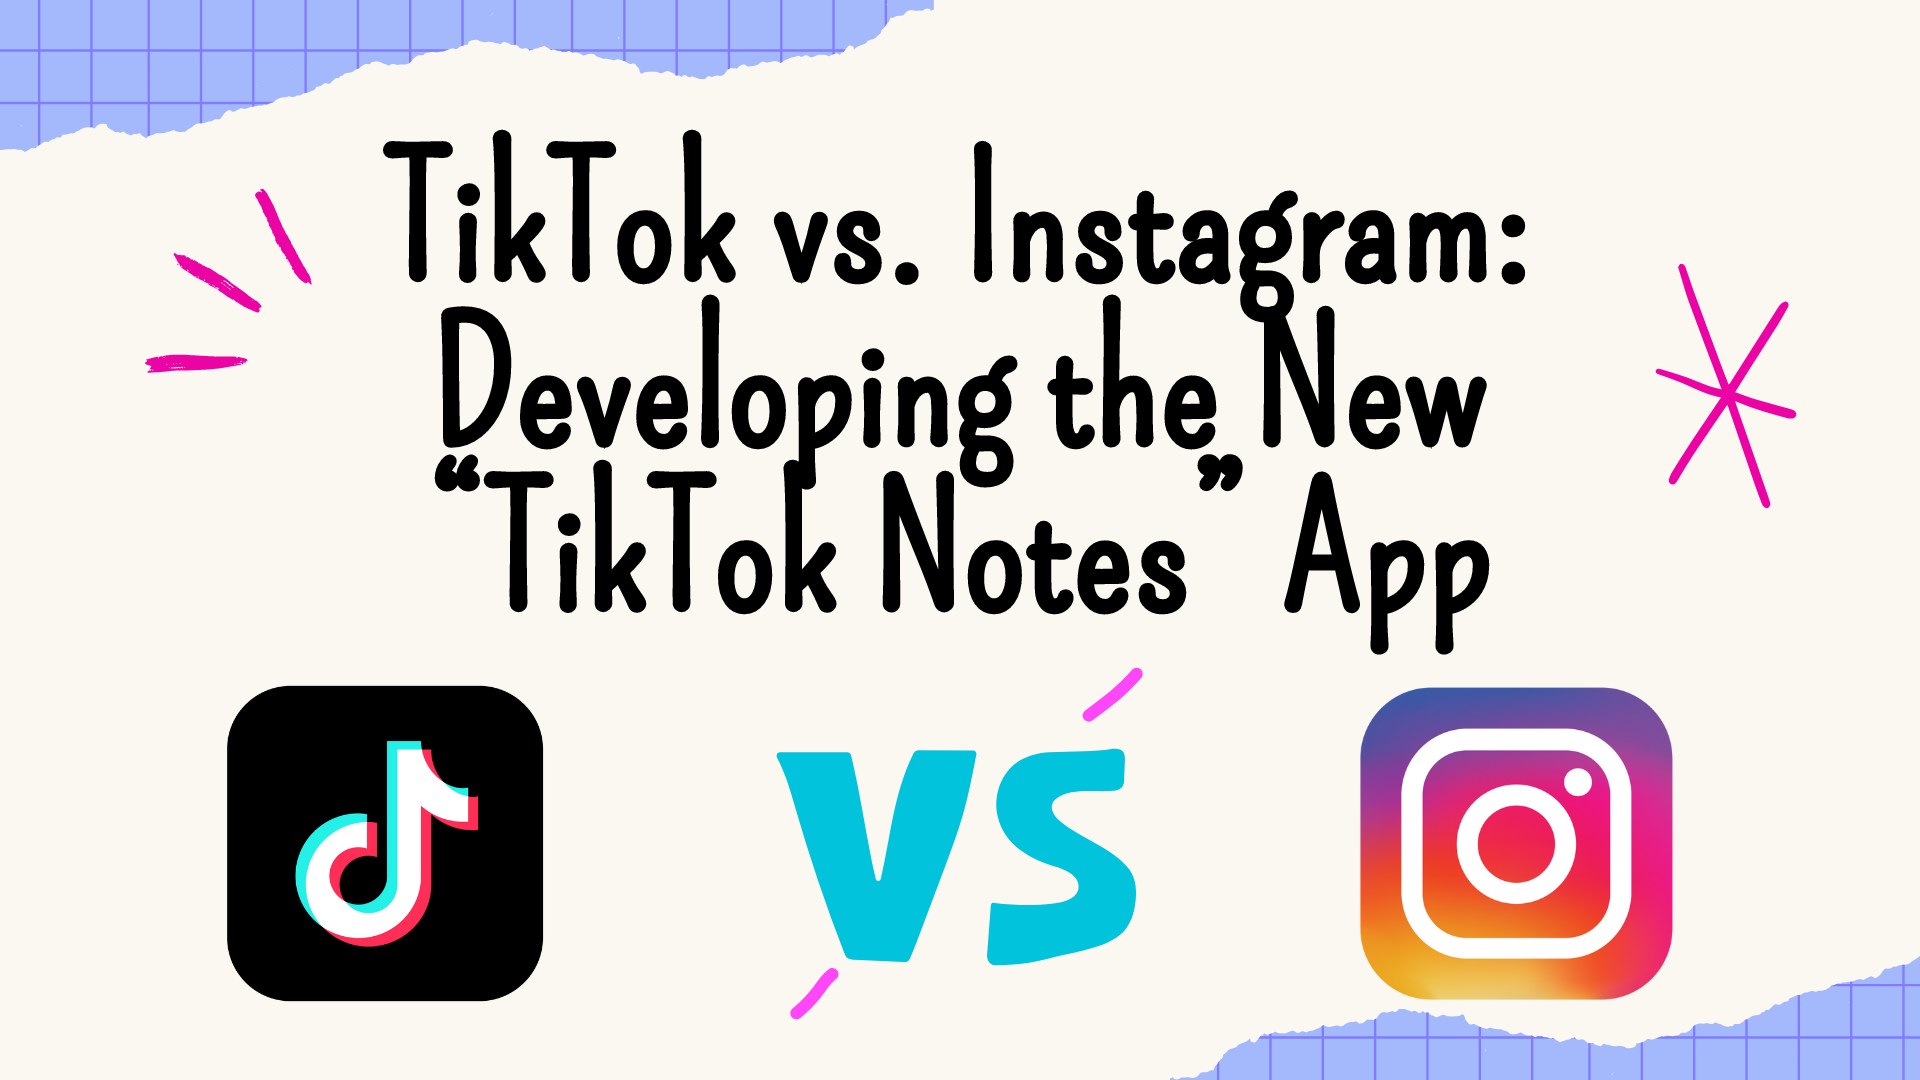 TikTok Notes